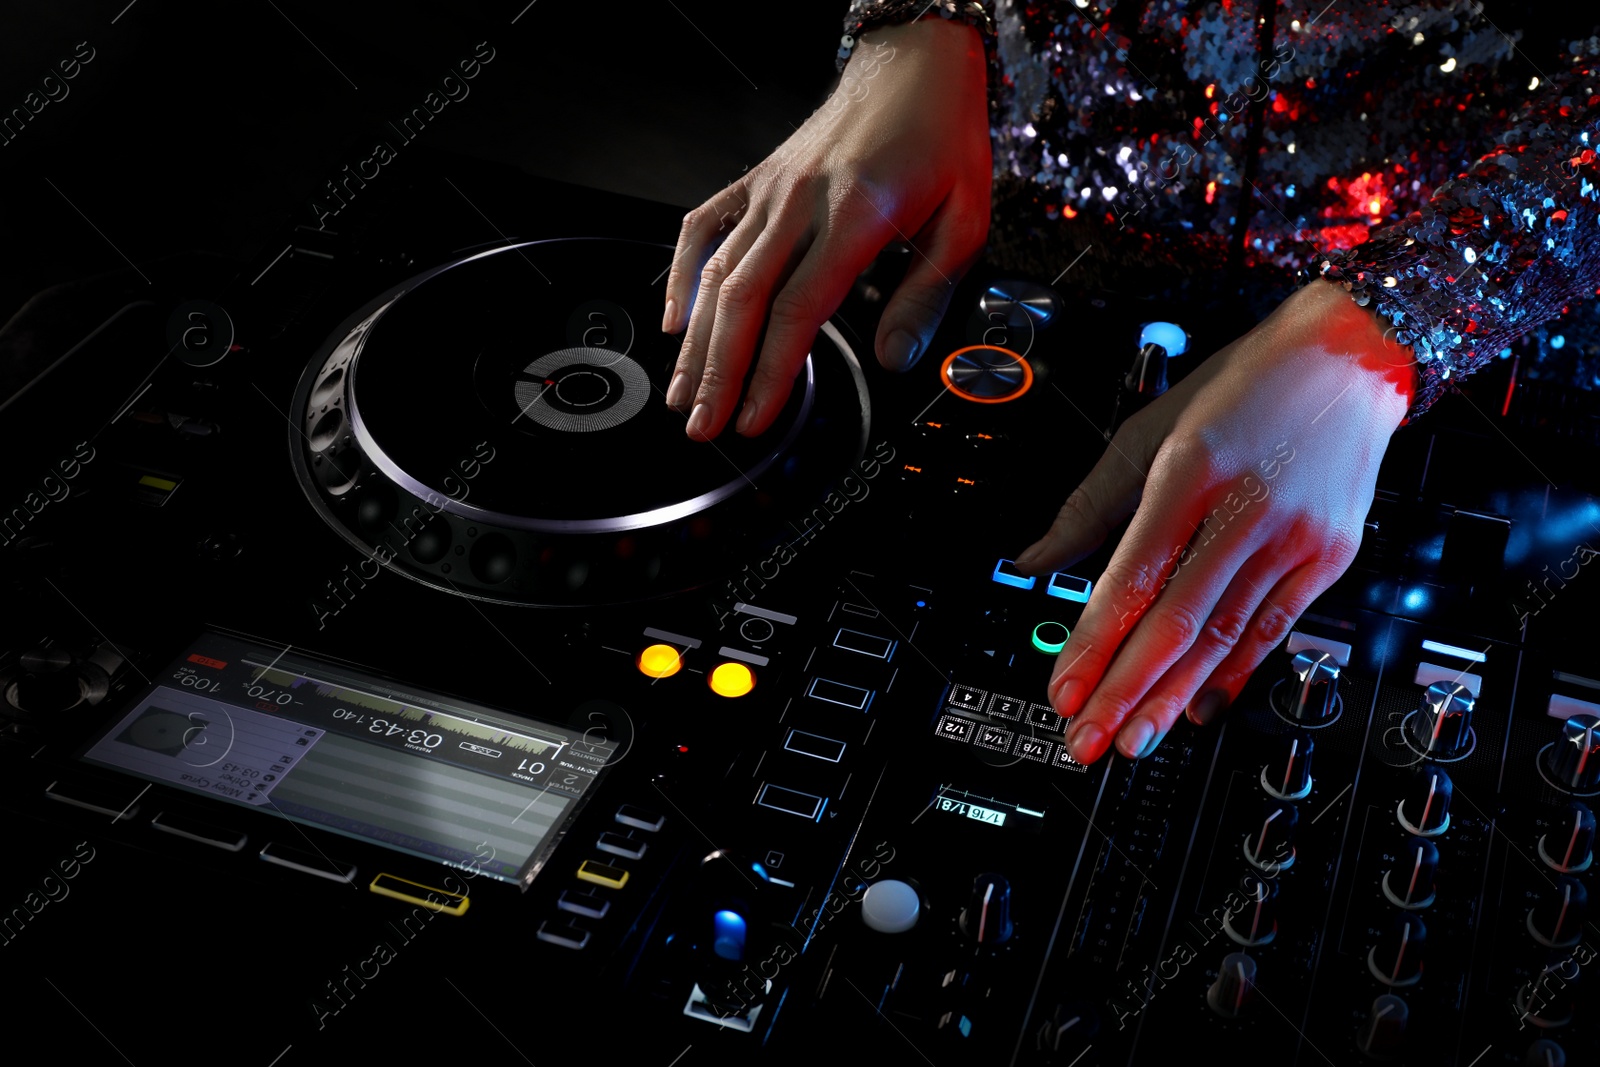 Photo of DJ creating music on modern console mixer in night club, closeup